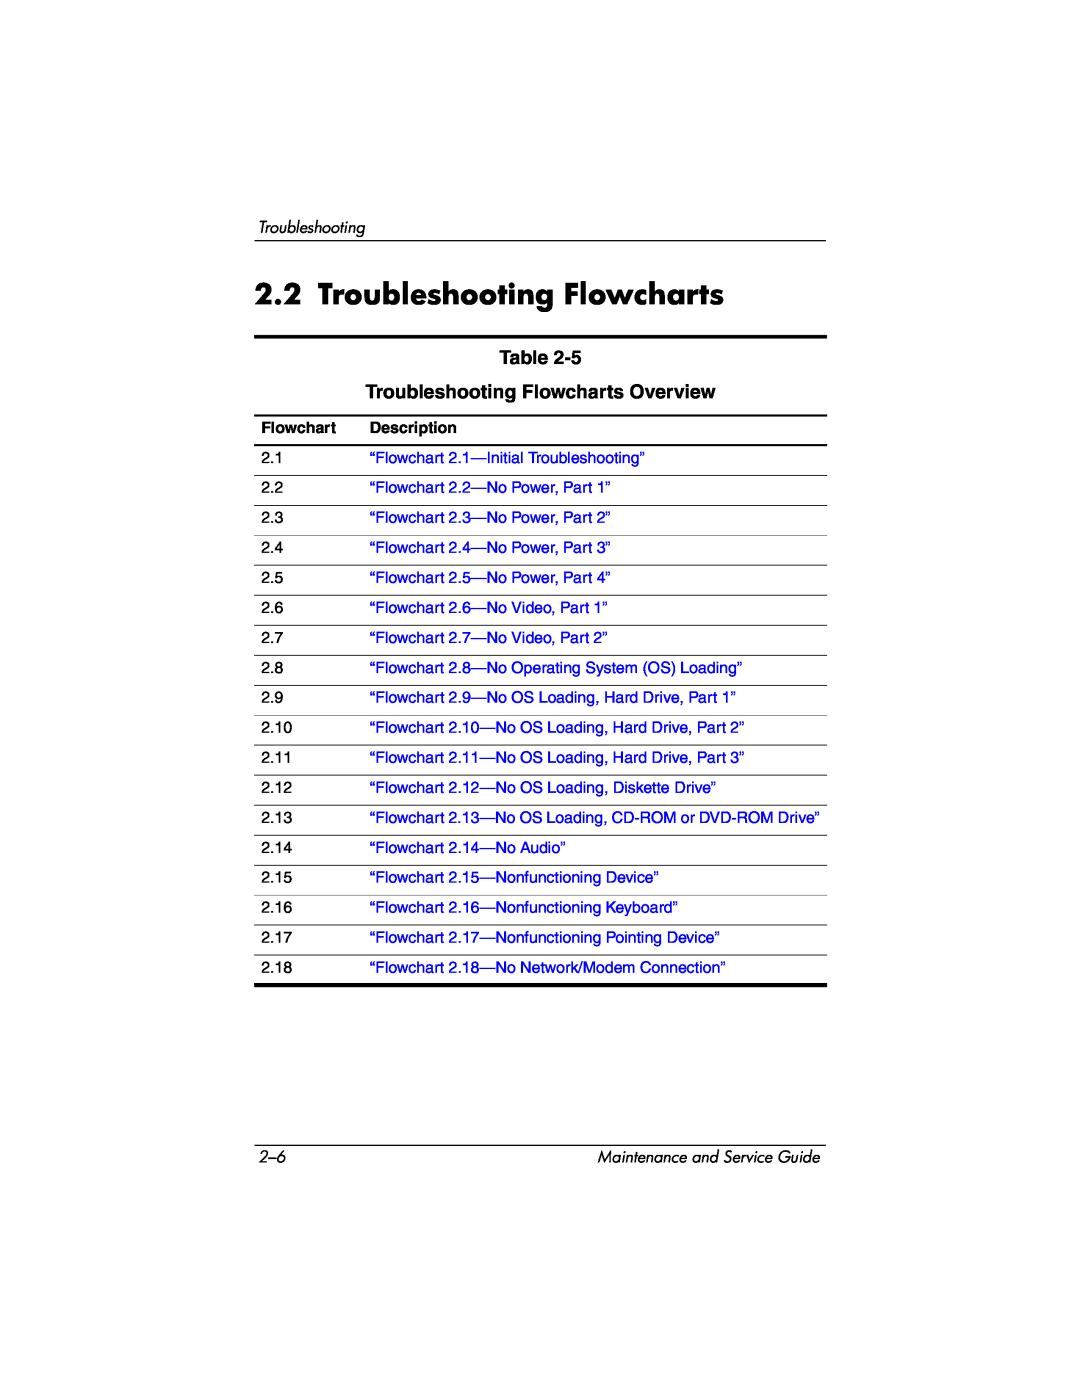 HP NX9040, NX9030, NX9020, ZE4900 manual Troubleshooting Flowcharts Overview, Description 